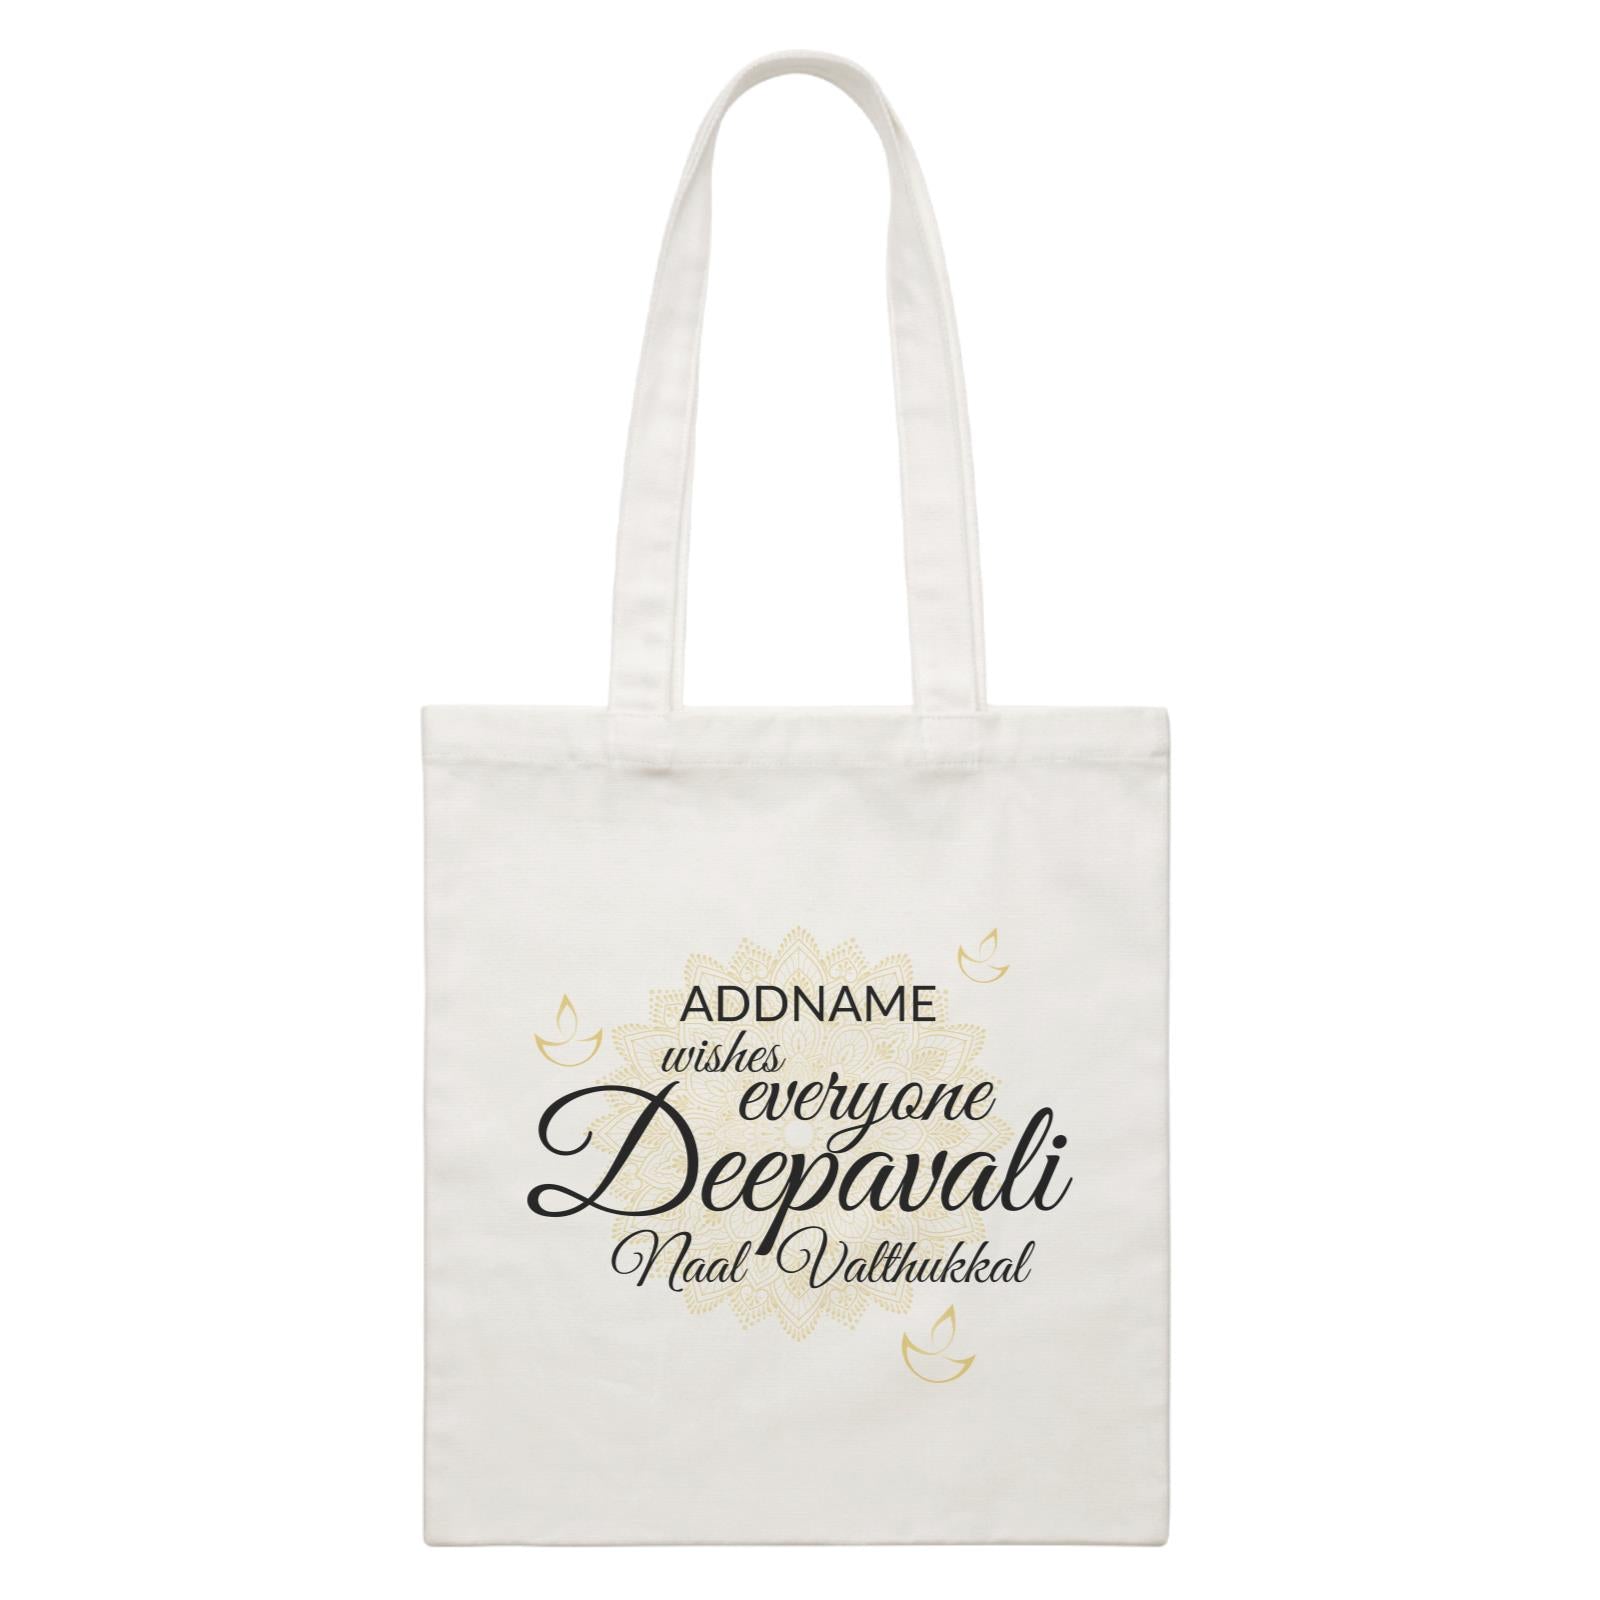 Addname Wishes Everyone Deepavali with Mandala White Canvas Bag